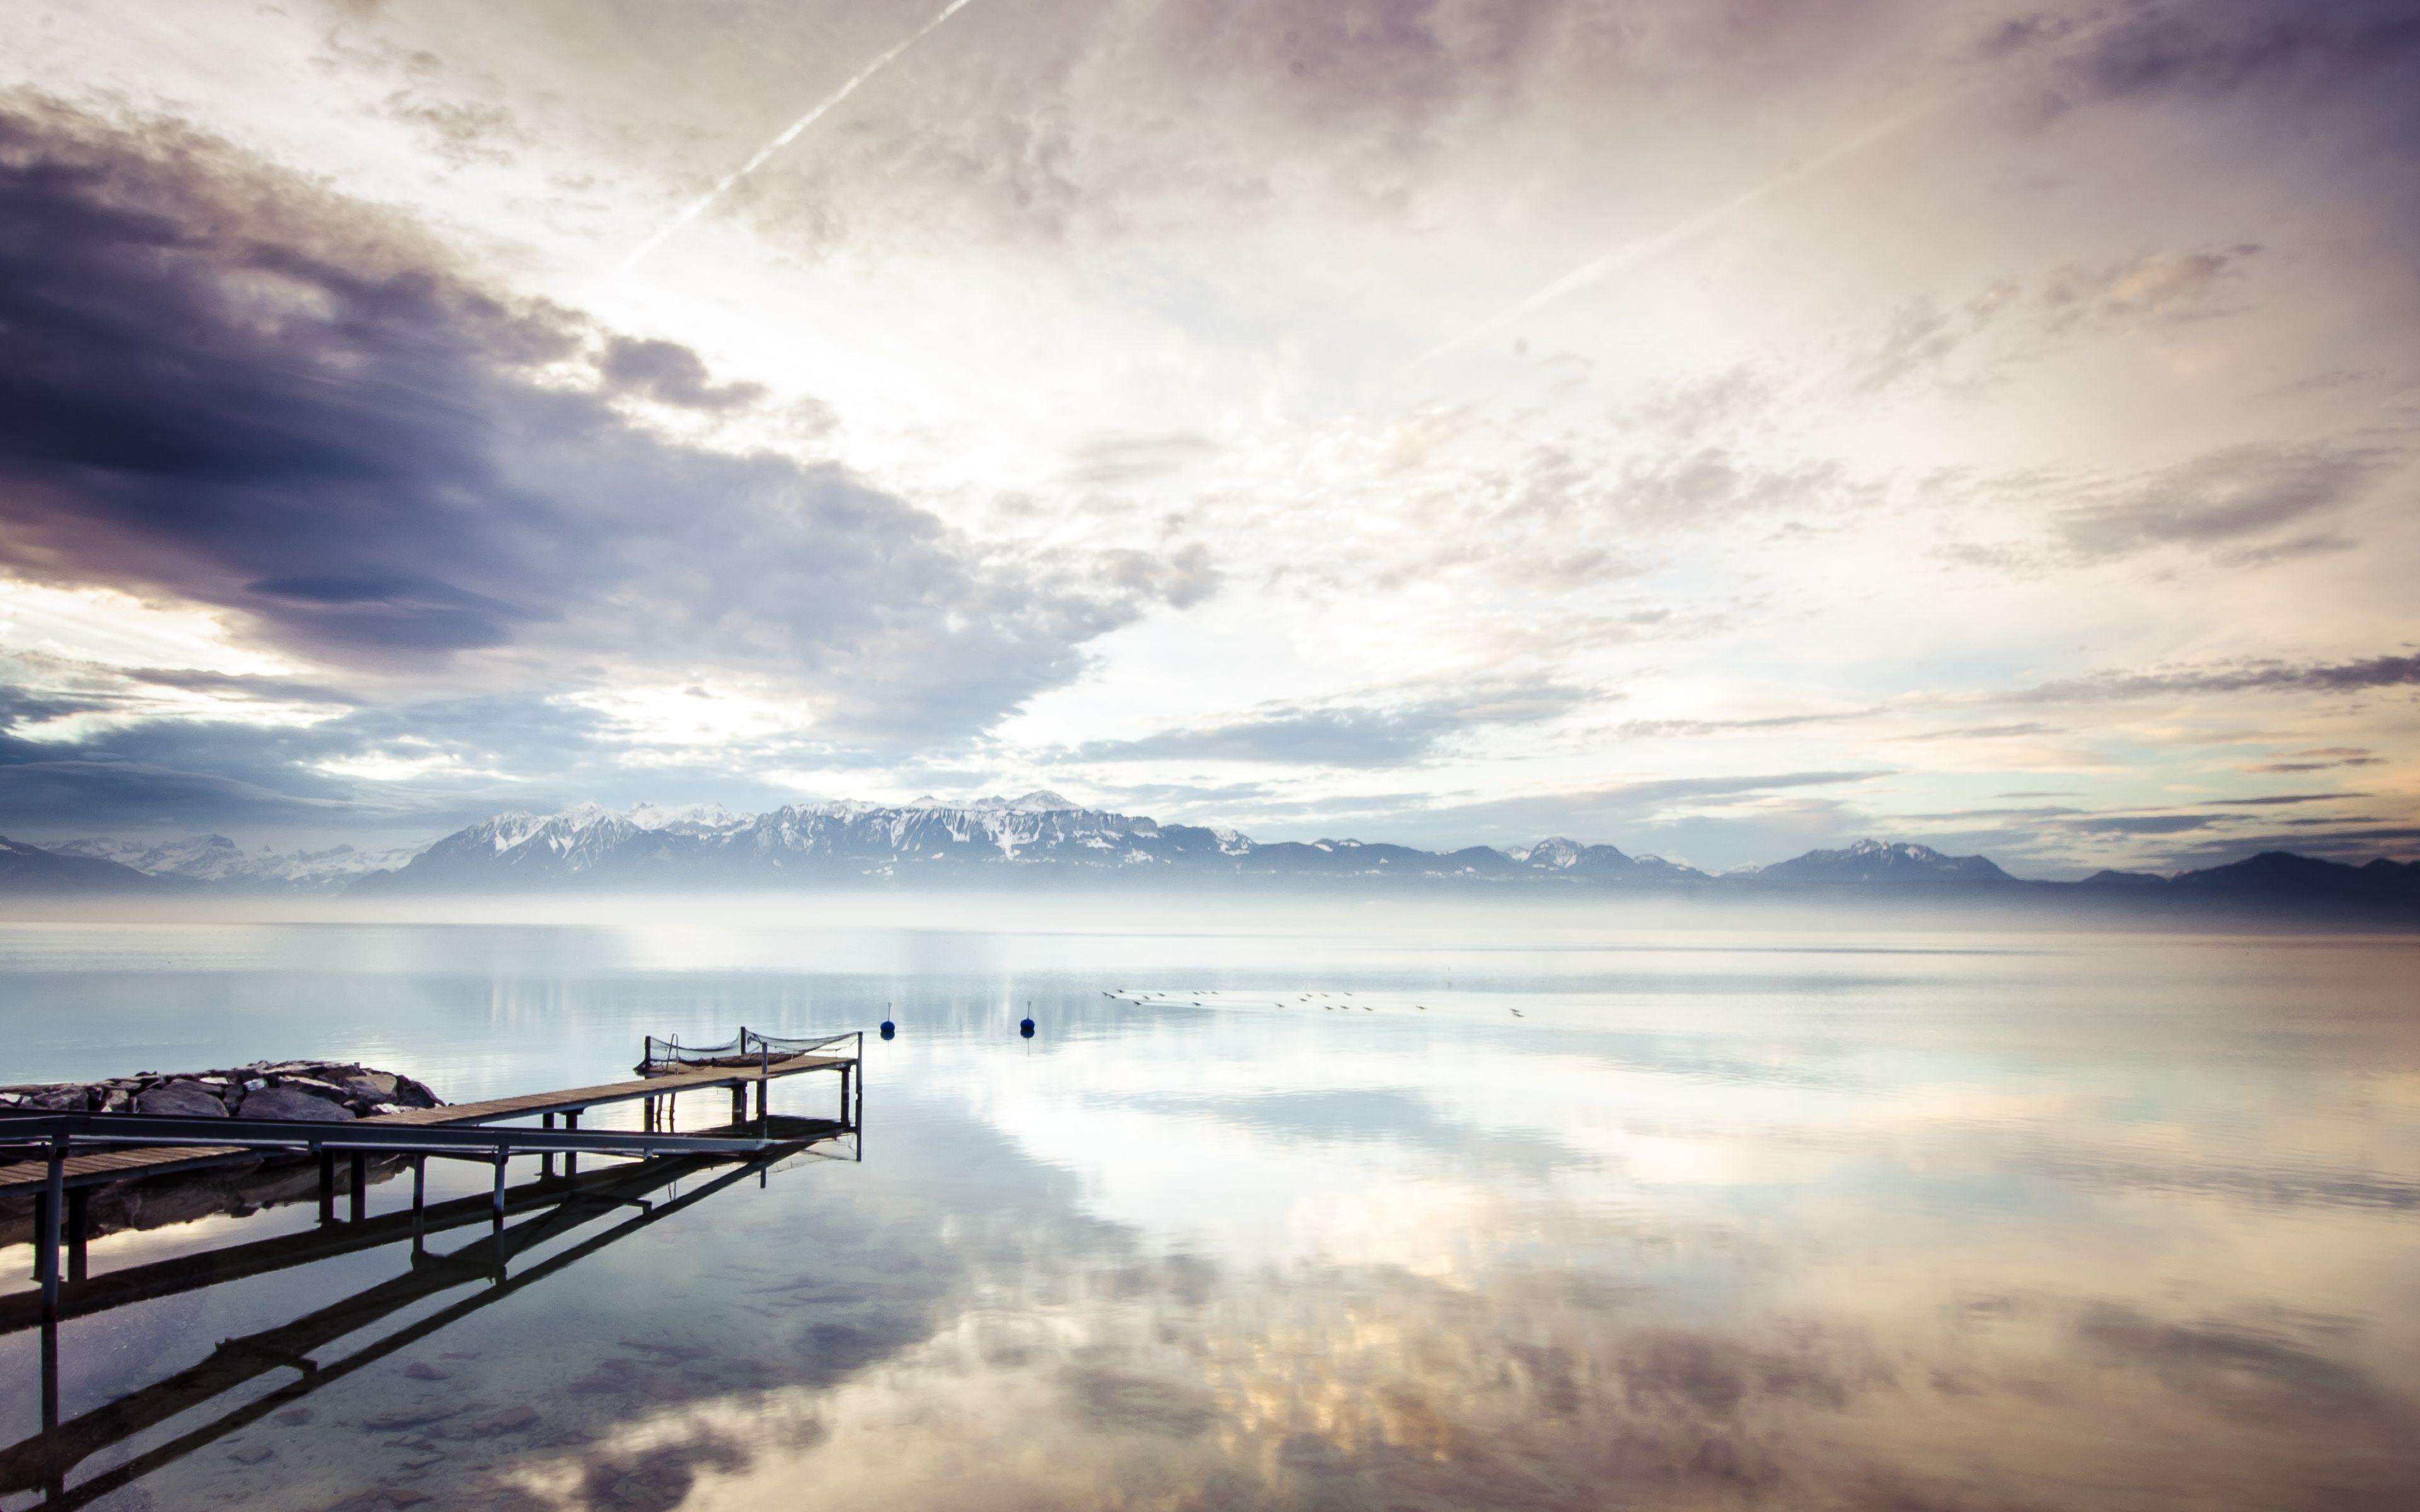 Lake Geneva, Switzerland wallpaper and image